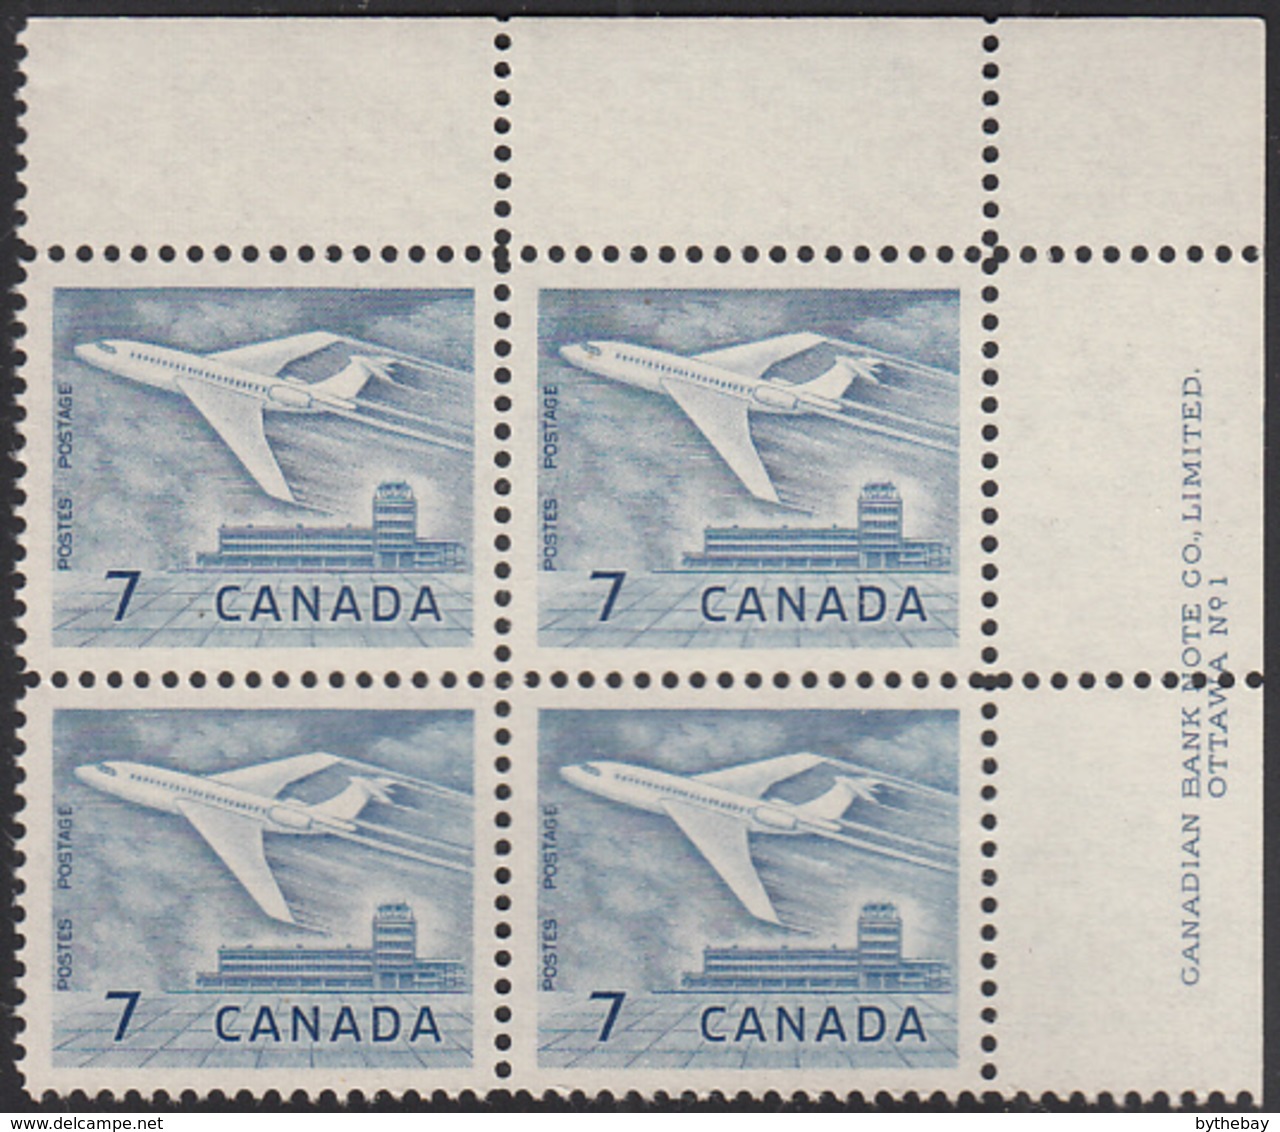 Canada 1964 MNH Sc #414 7c Jet Plane, Ottawa Plate #1 UR - Plate Number & Inscriptions